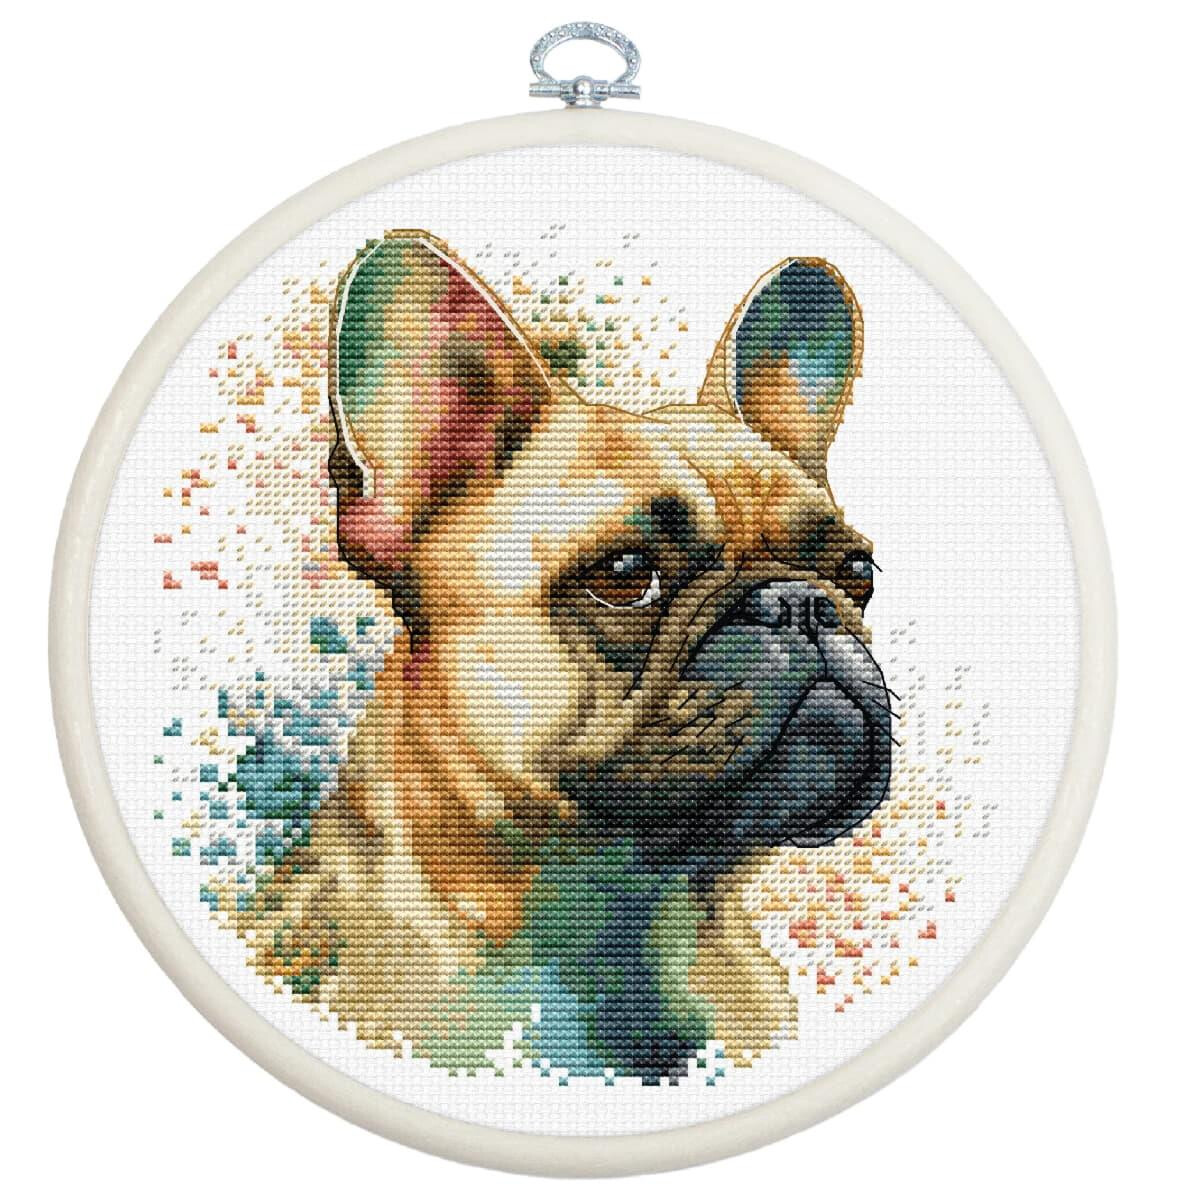 Un detallado retrato bordado de un bulldog francés...